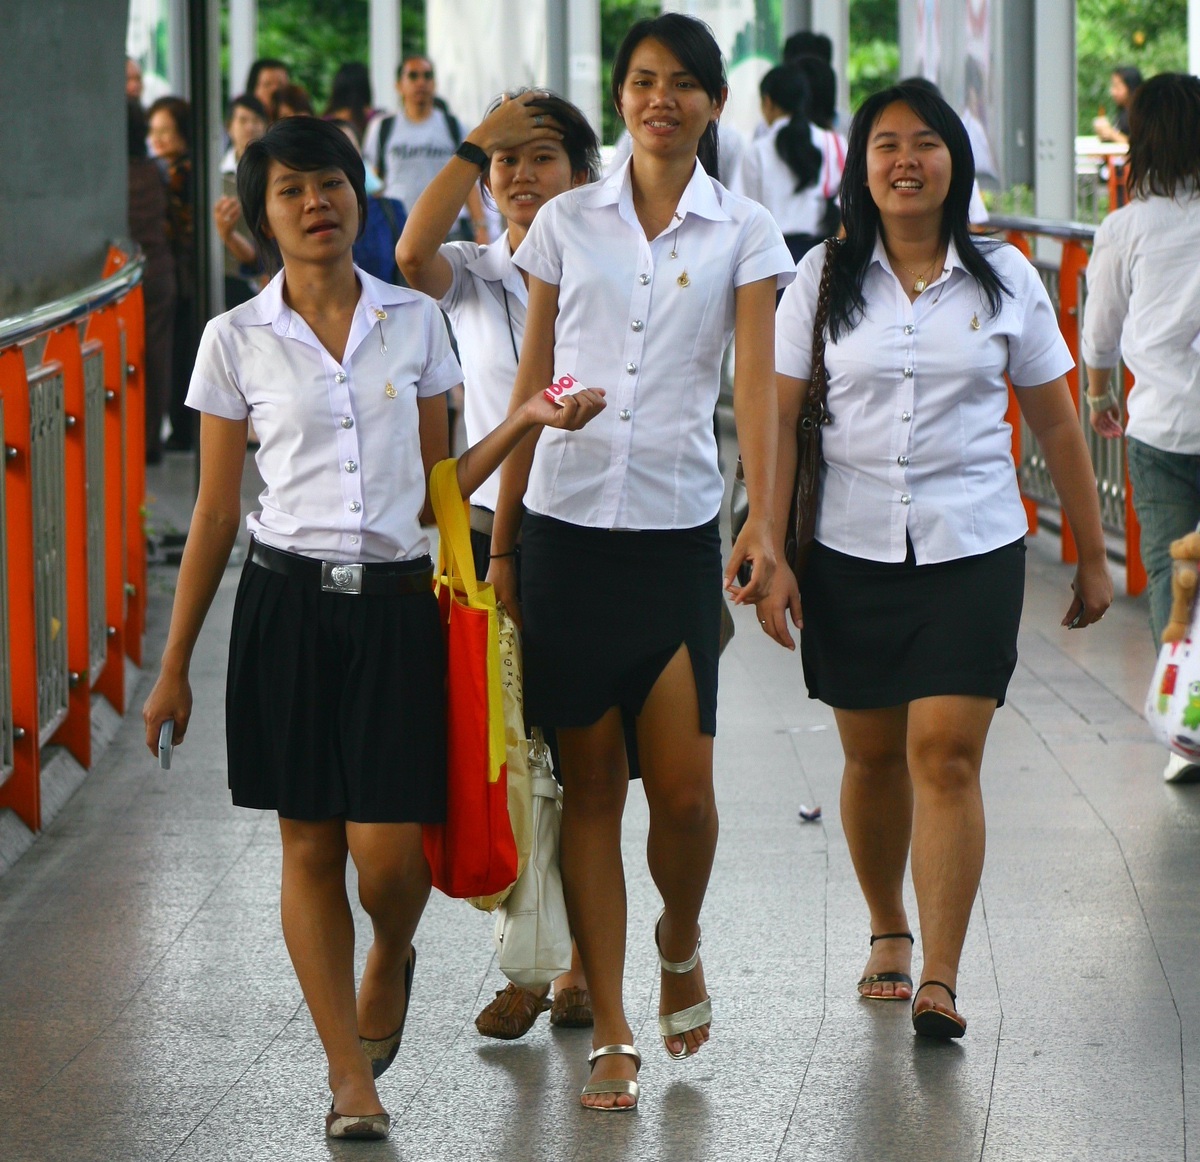 Thai Schools Advised to Suspend Onsite Classes on Hot Days